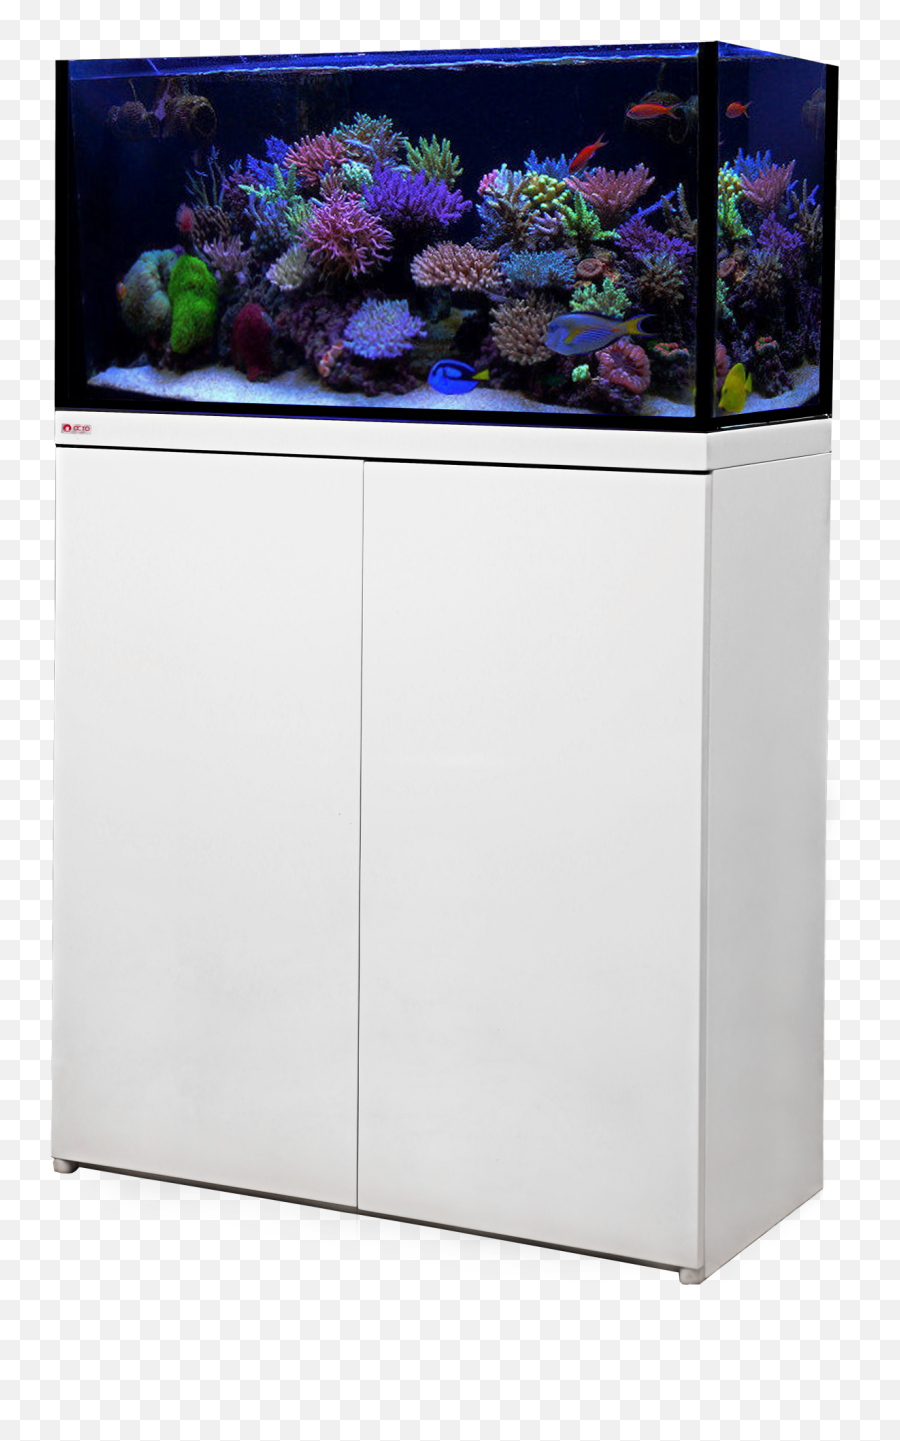 Lux Aquarium Tank System White Color 2 Models Available - White Aquarium Stand Png,Aquarium Png